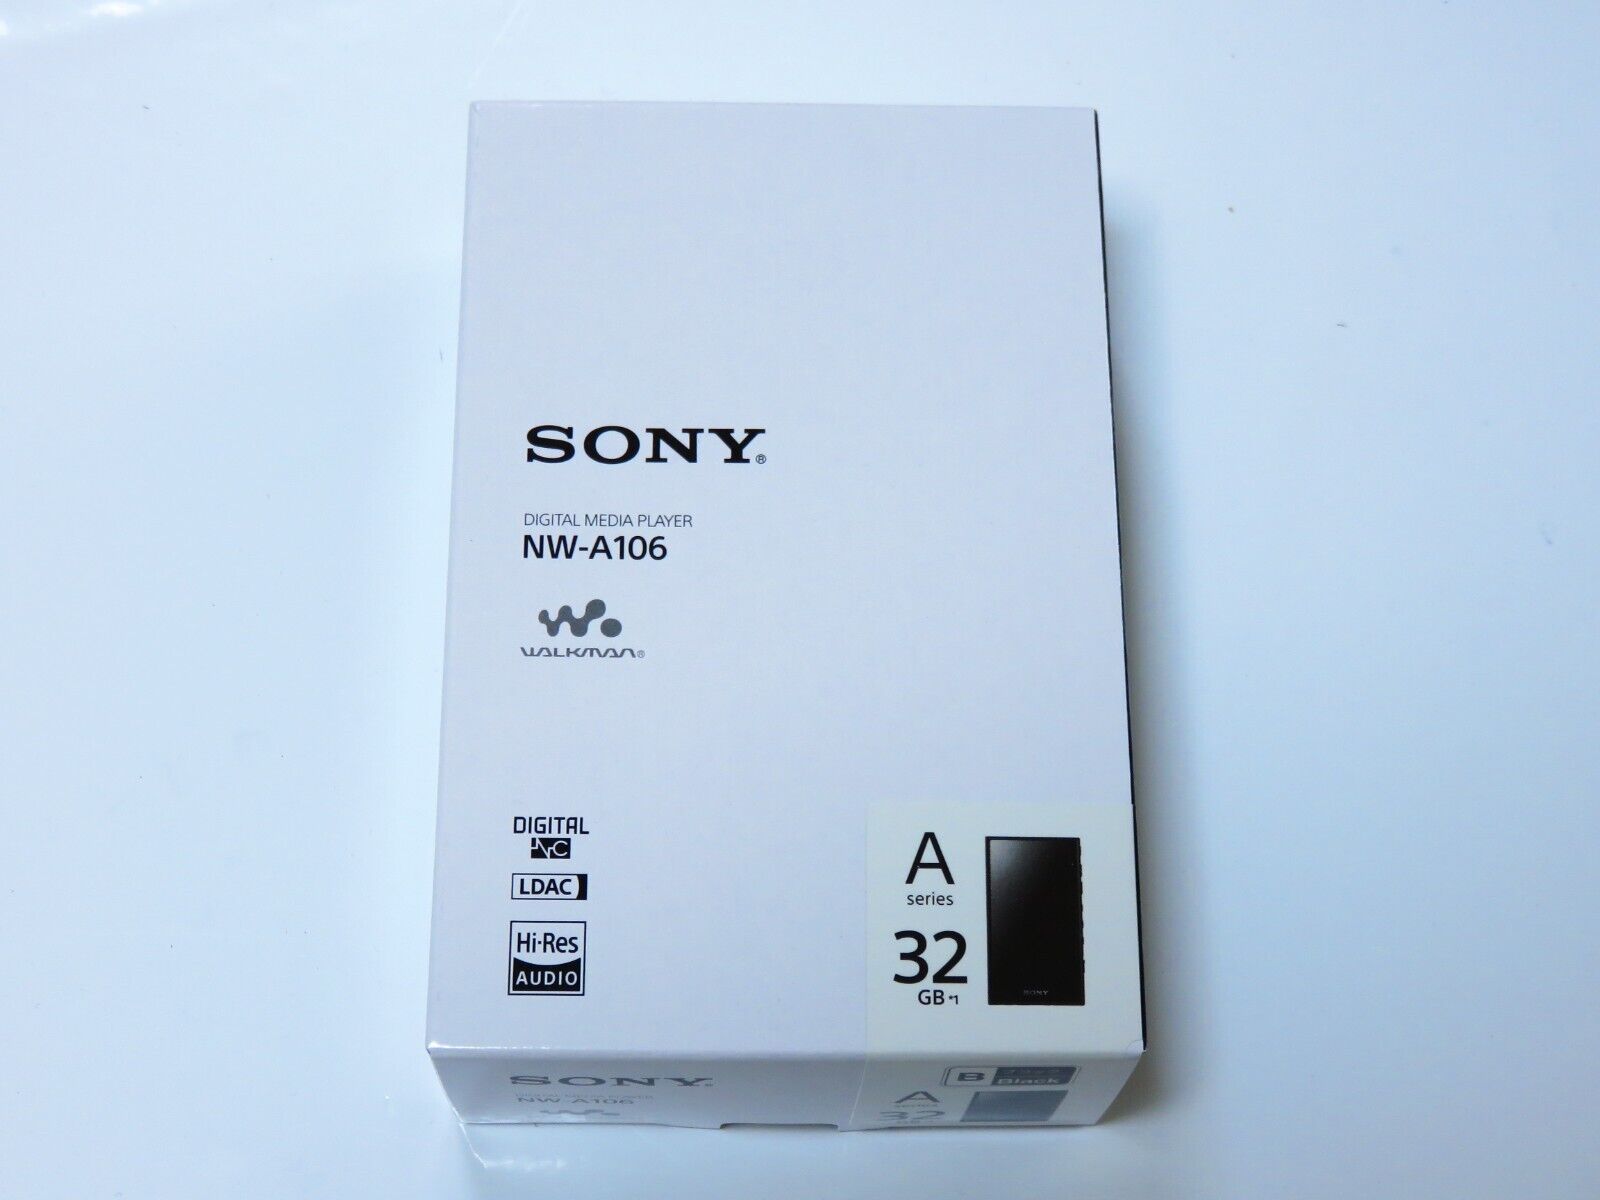 Sony Walkman 32gb a Series Nw-a106 B Black for sale online | eBay